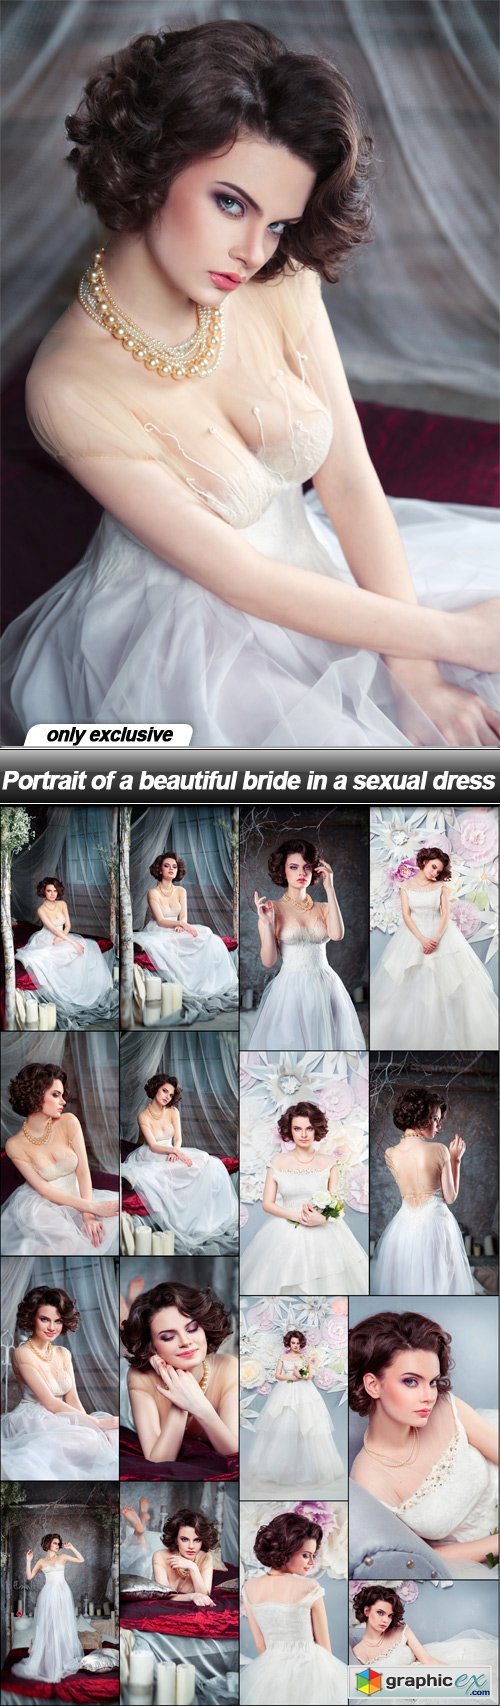 Portrait of a beautiful bride in a sexual dress - 17 UHQ JPEG